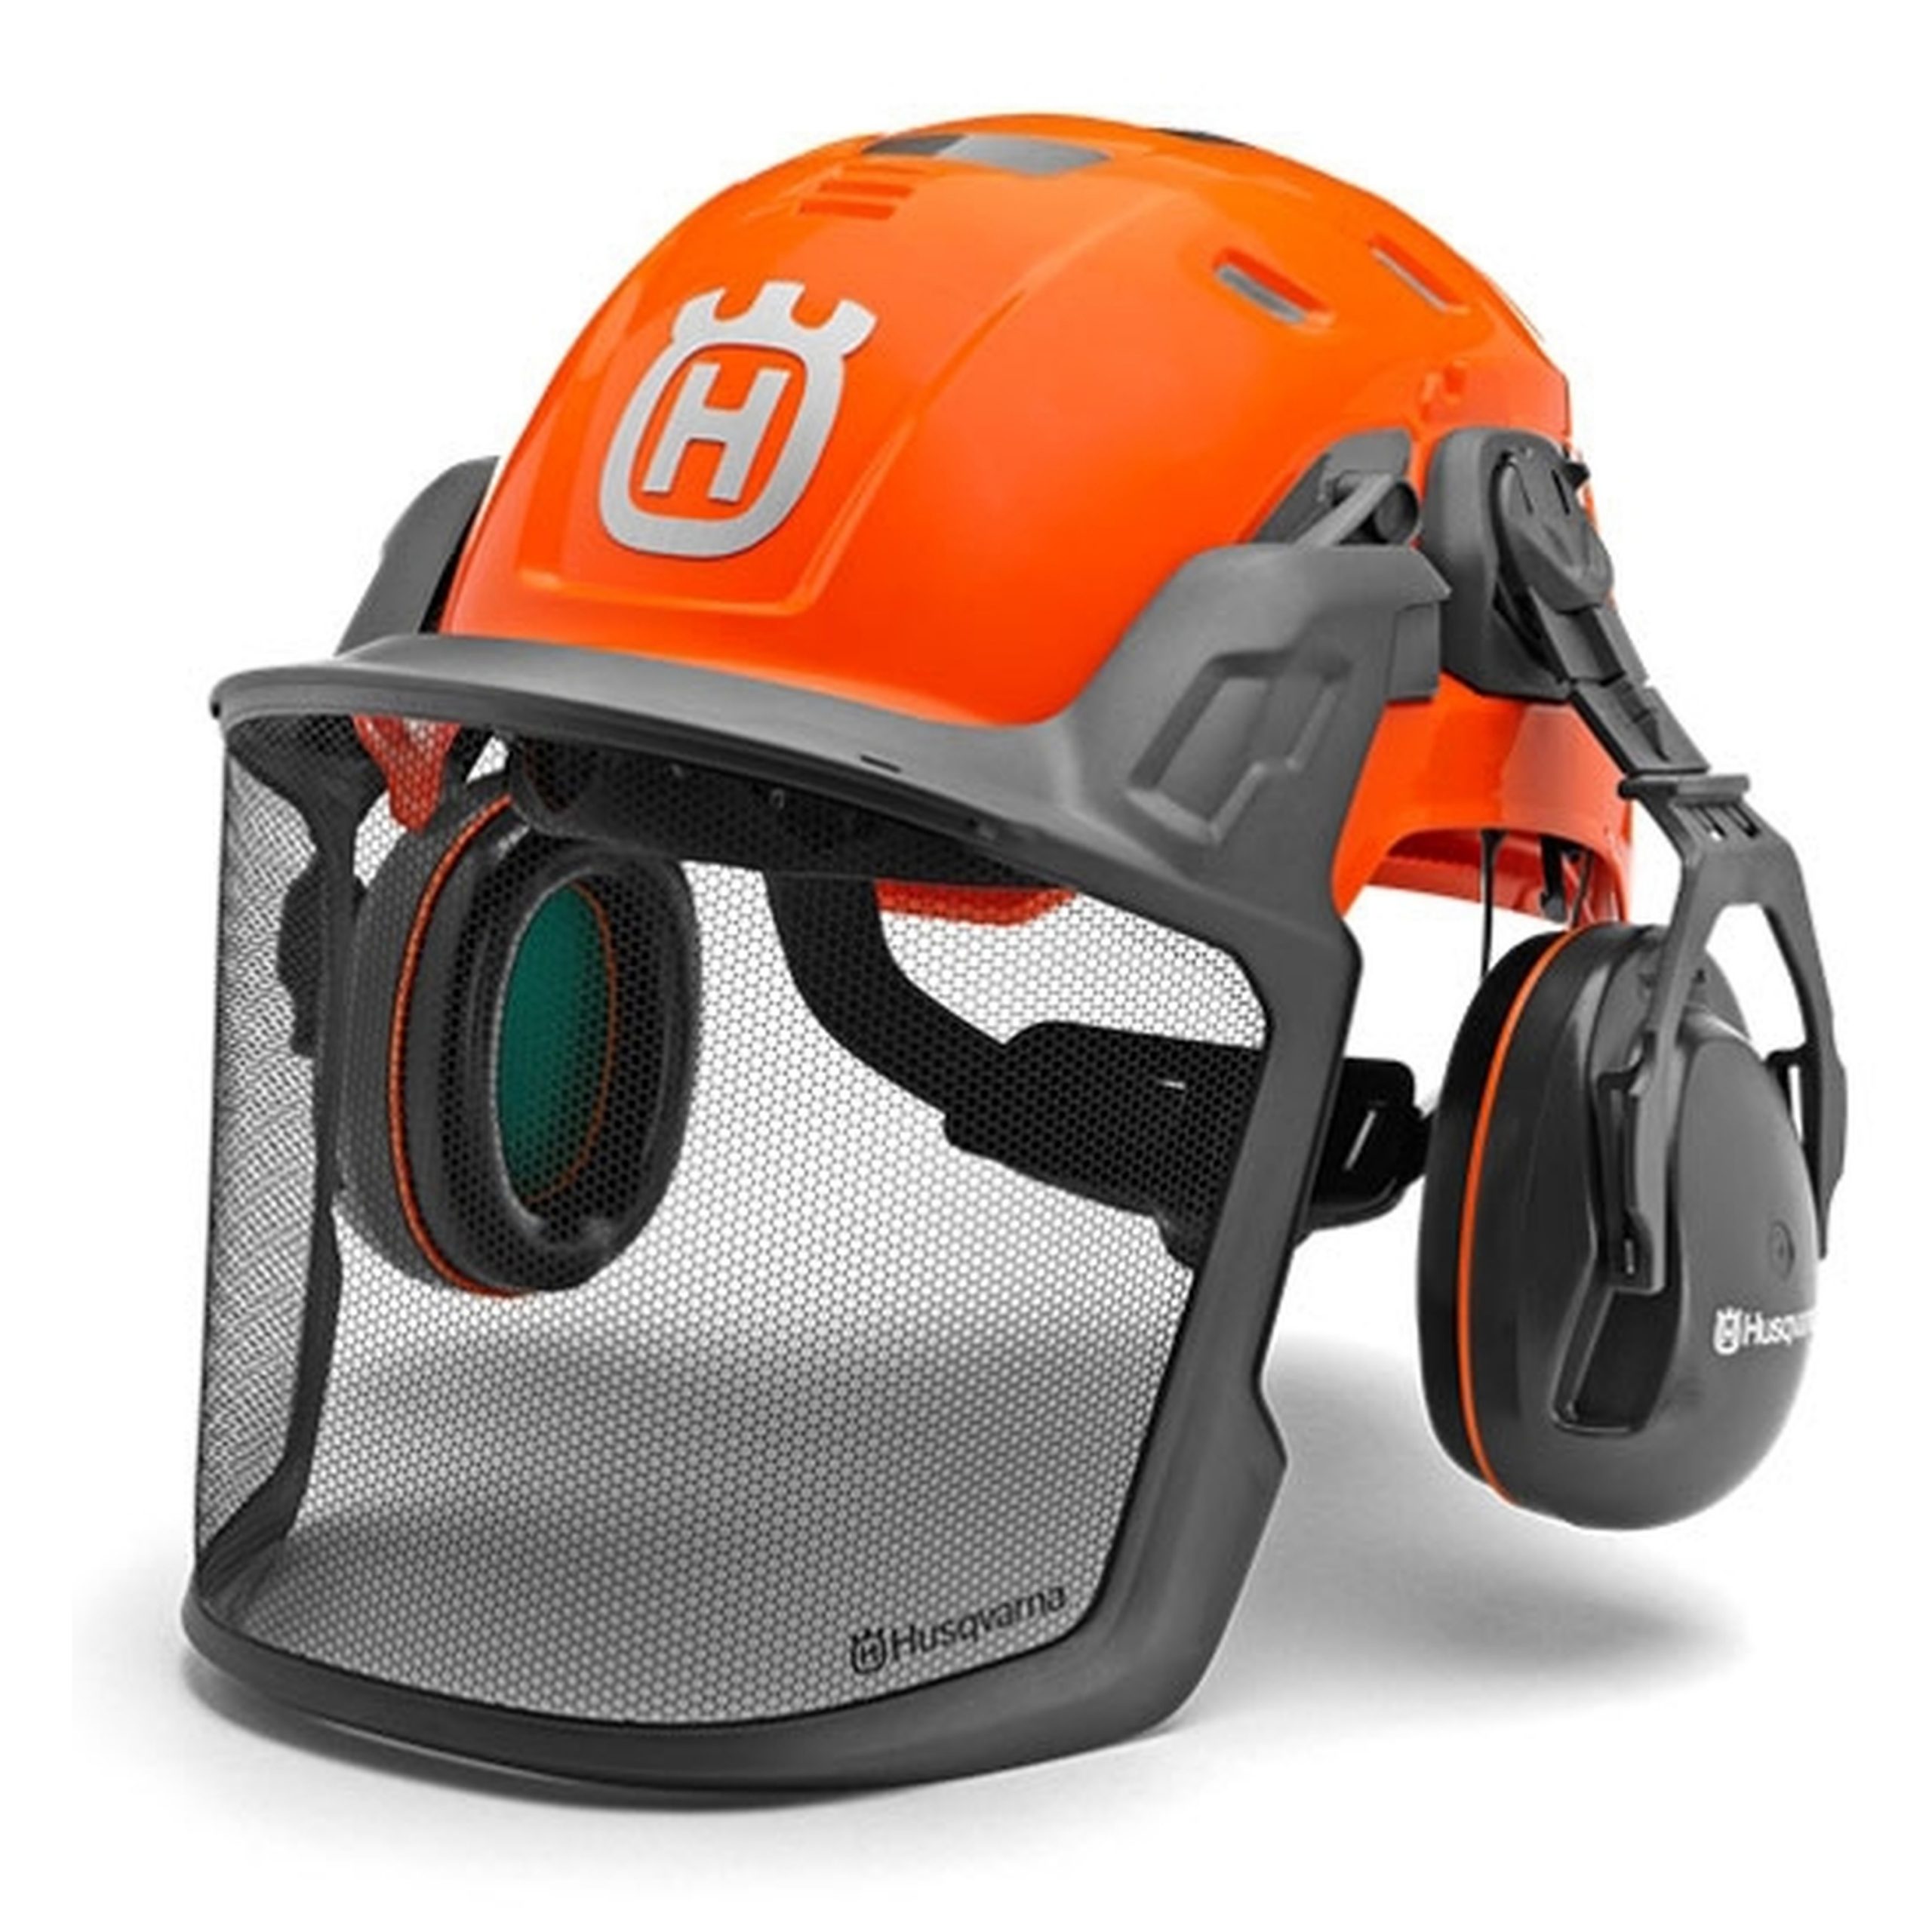 Husqvarna 585 07 73-01: Technical Forest Safety Helmet